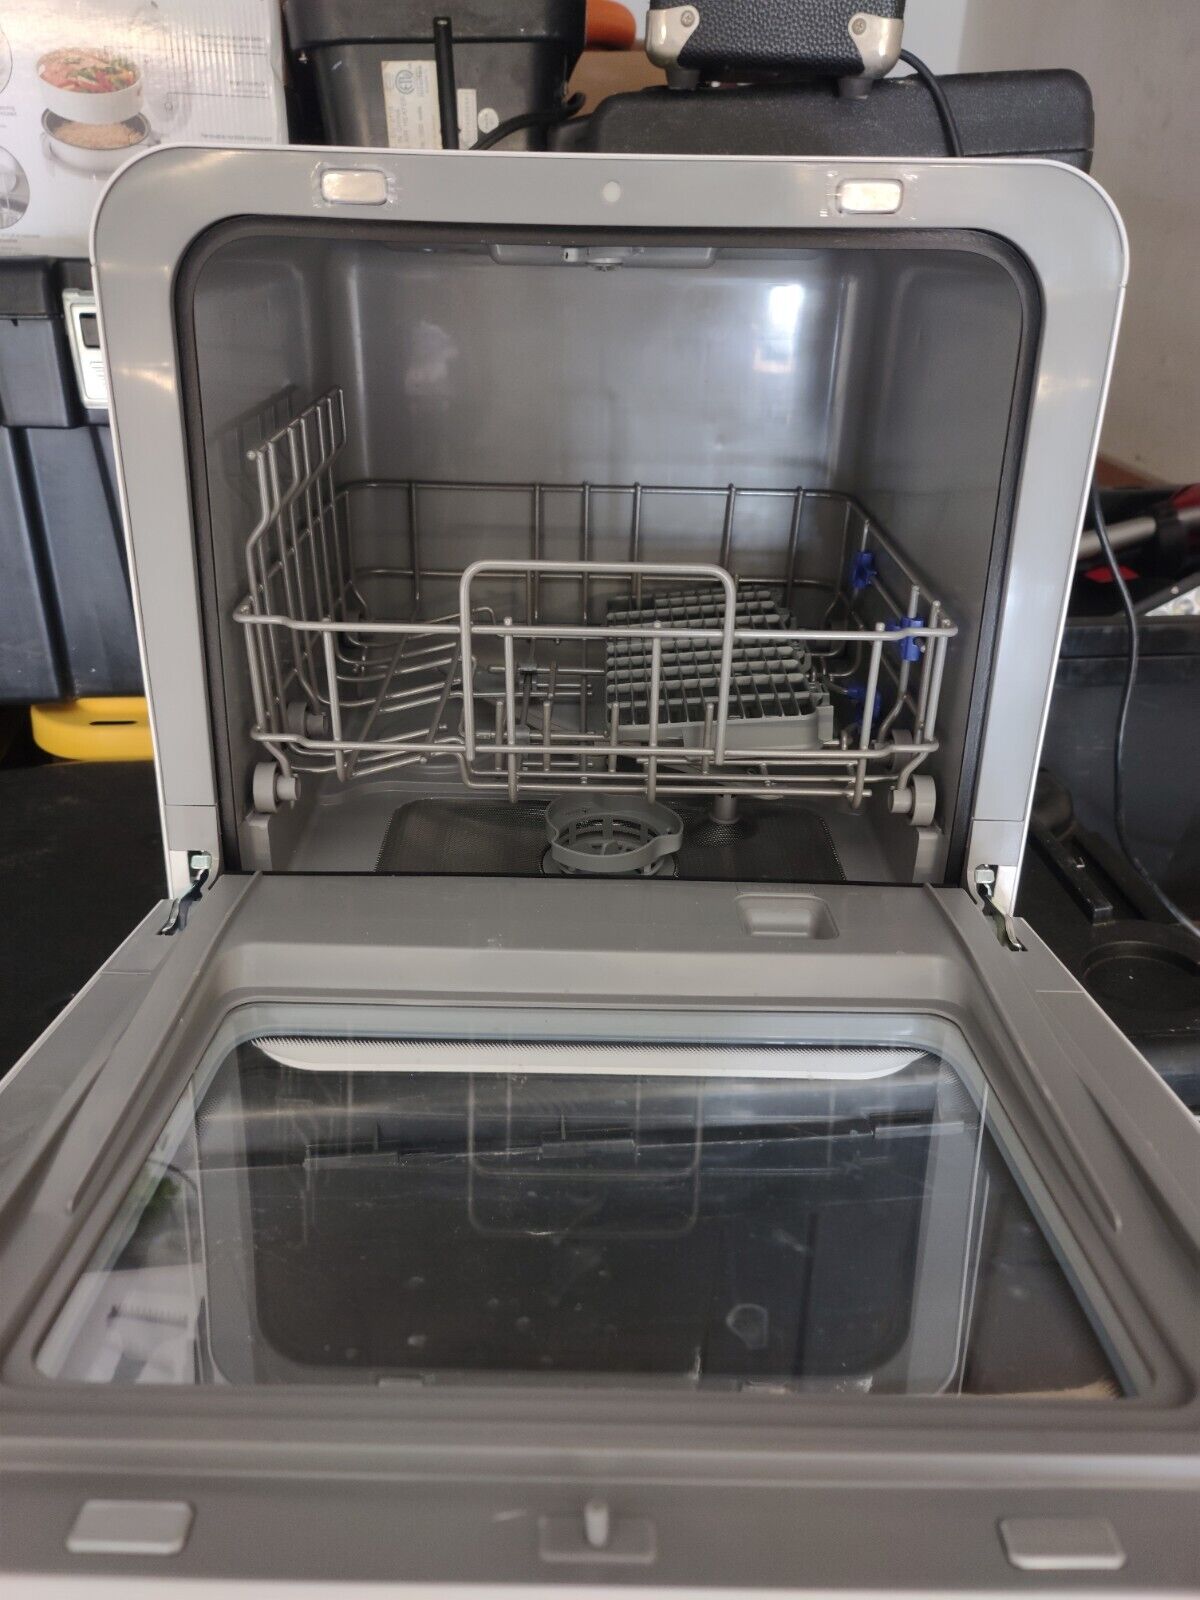  COMFEE Portable Dishwasher, Countertop Dishwasher